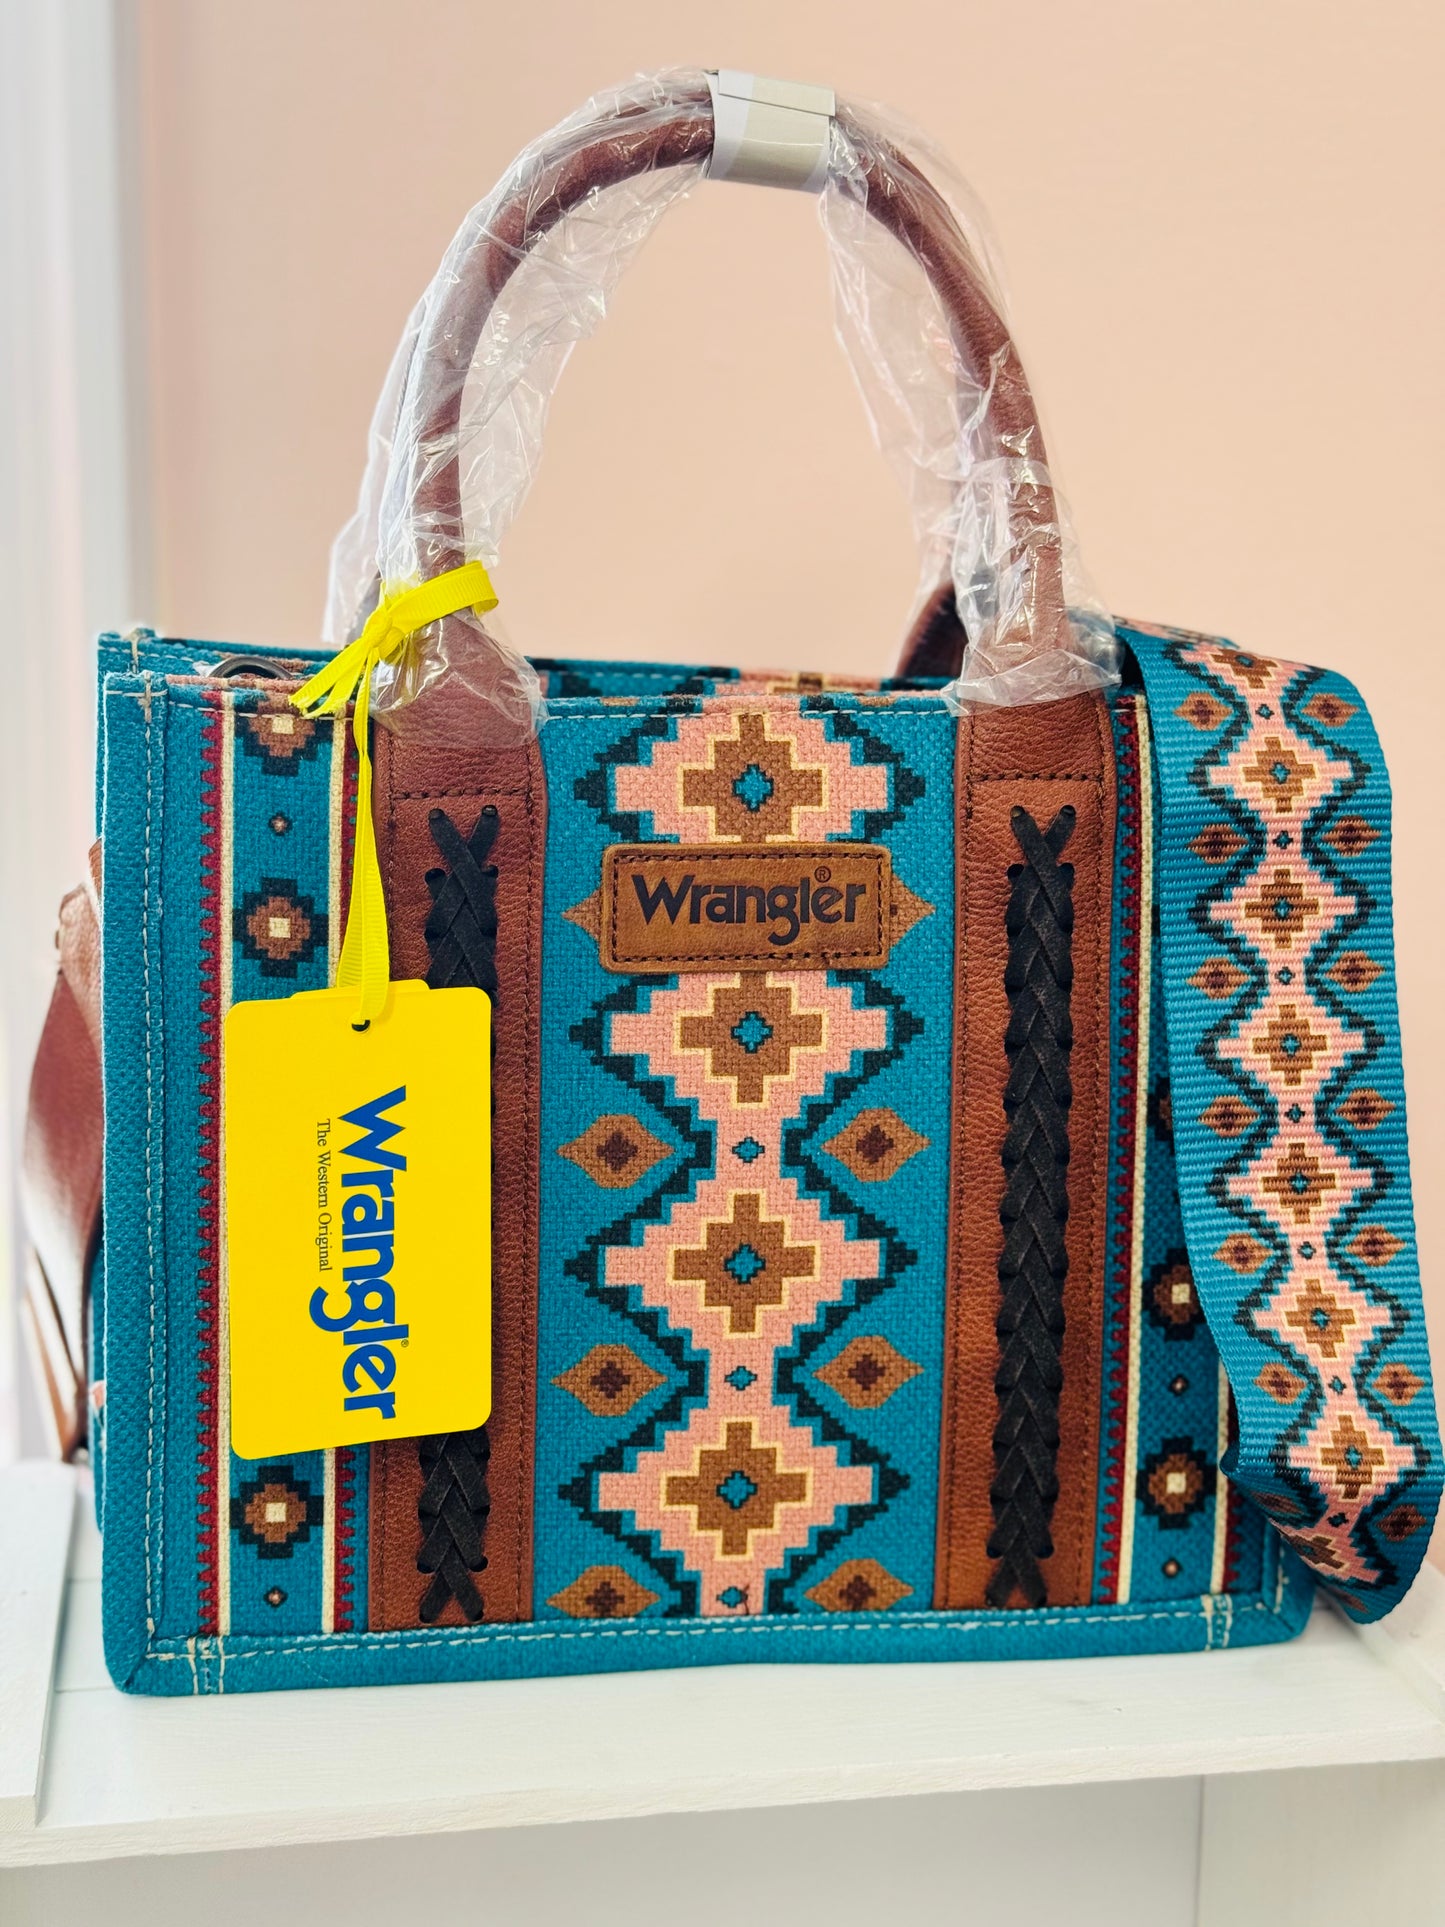 Wrangler bag with guitar strap (5 colors)